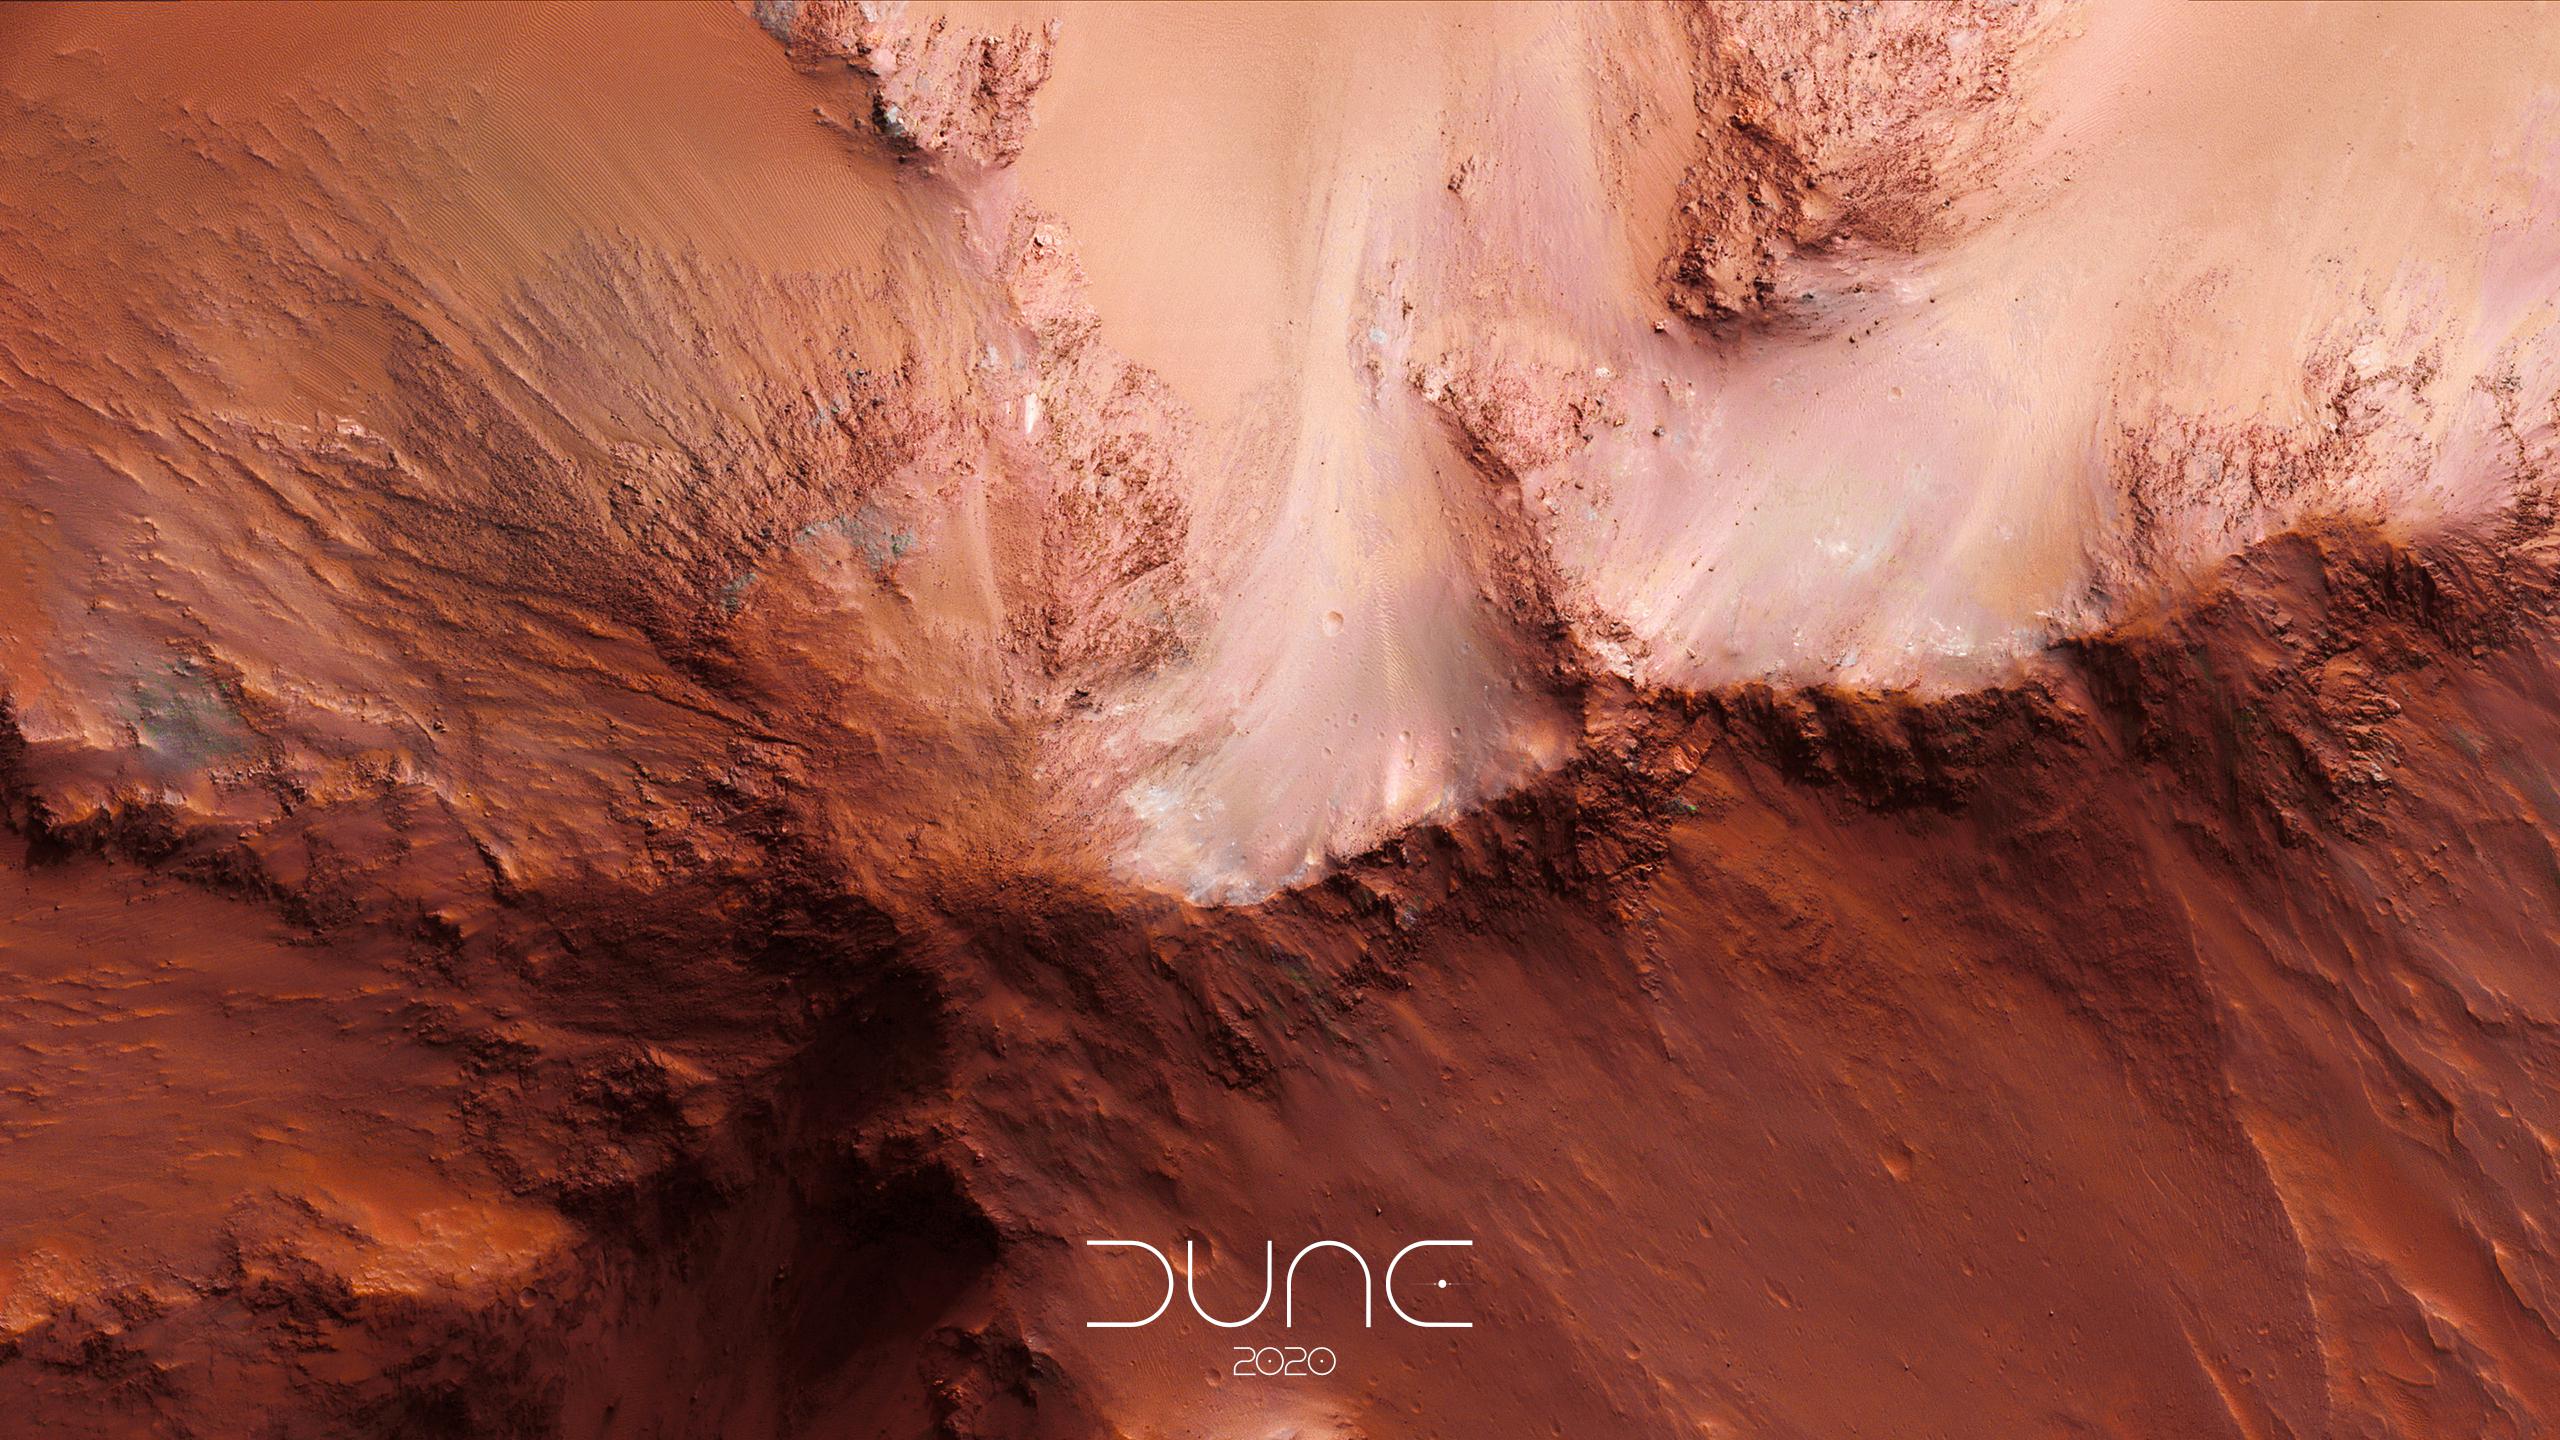 Free download Another Dune Wallpaper dune [2560x1440] for your Desktop, Mobile & Tablet. Explore Dune 2020 Wallpaper. Dune Wallpaper, Frank Herbert's Dune Wallpaper, Mulan 2020 Wallpaper